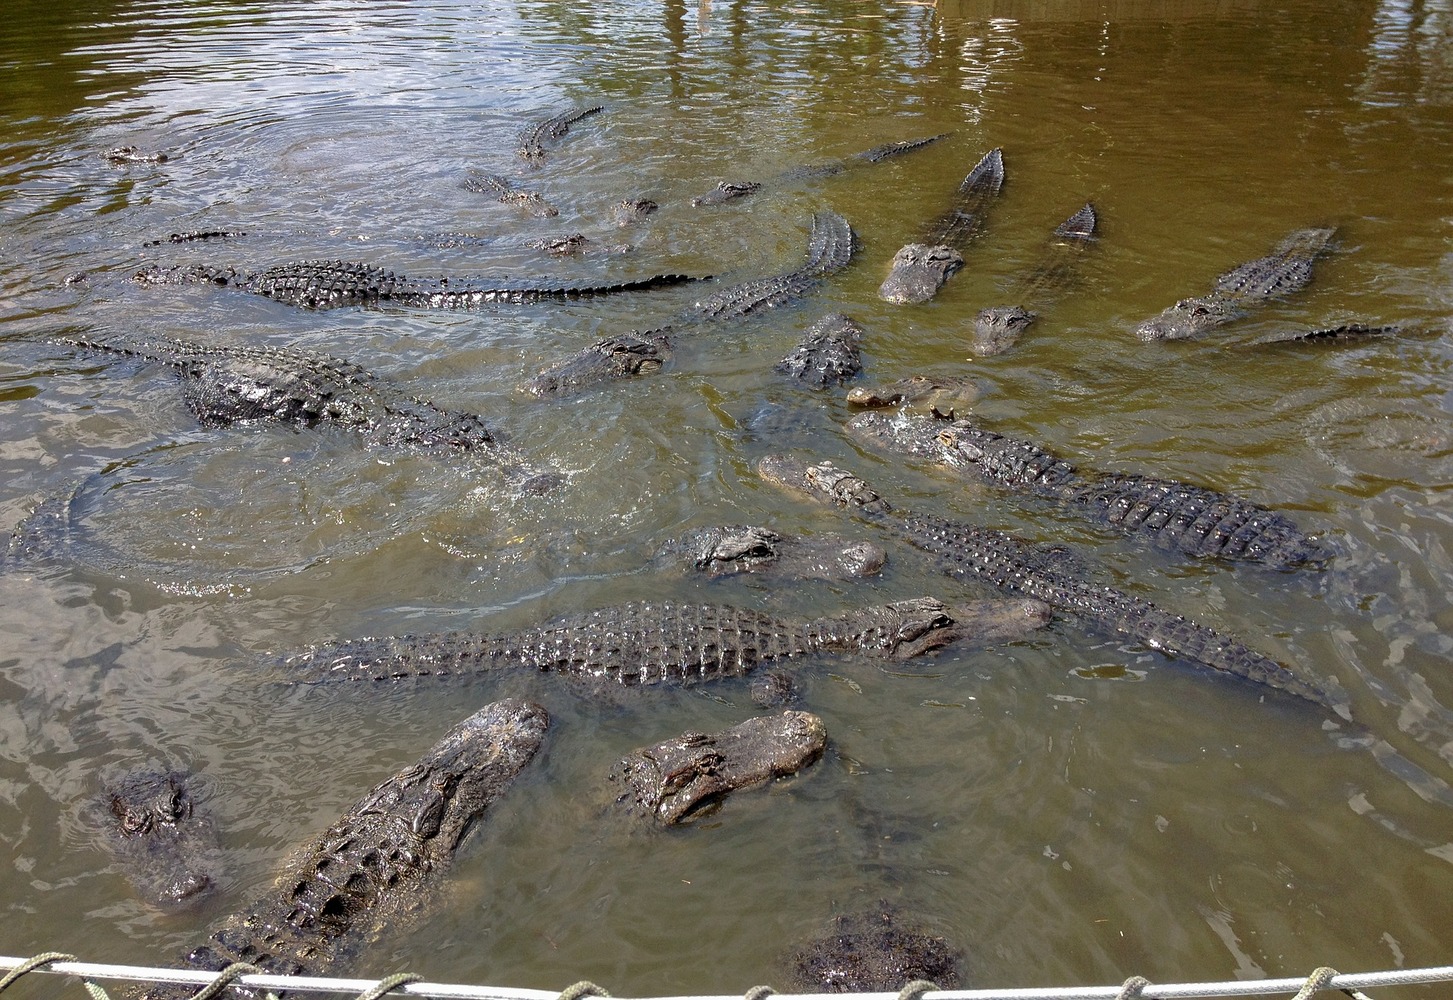 Photograph of alligator pit at Orlando Florida Gatorland